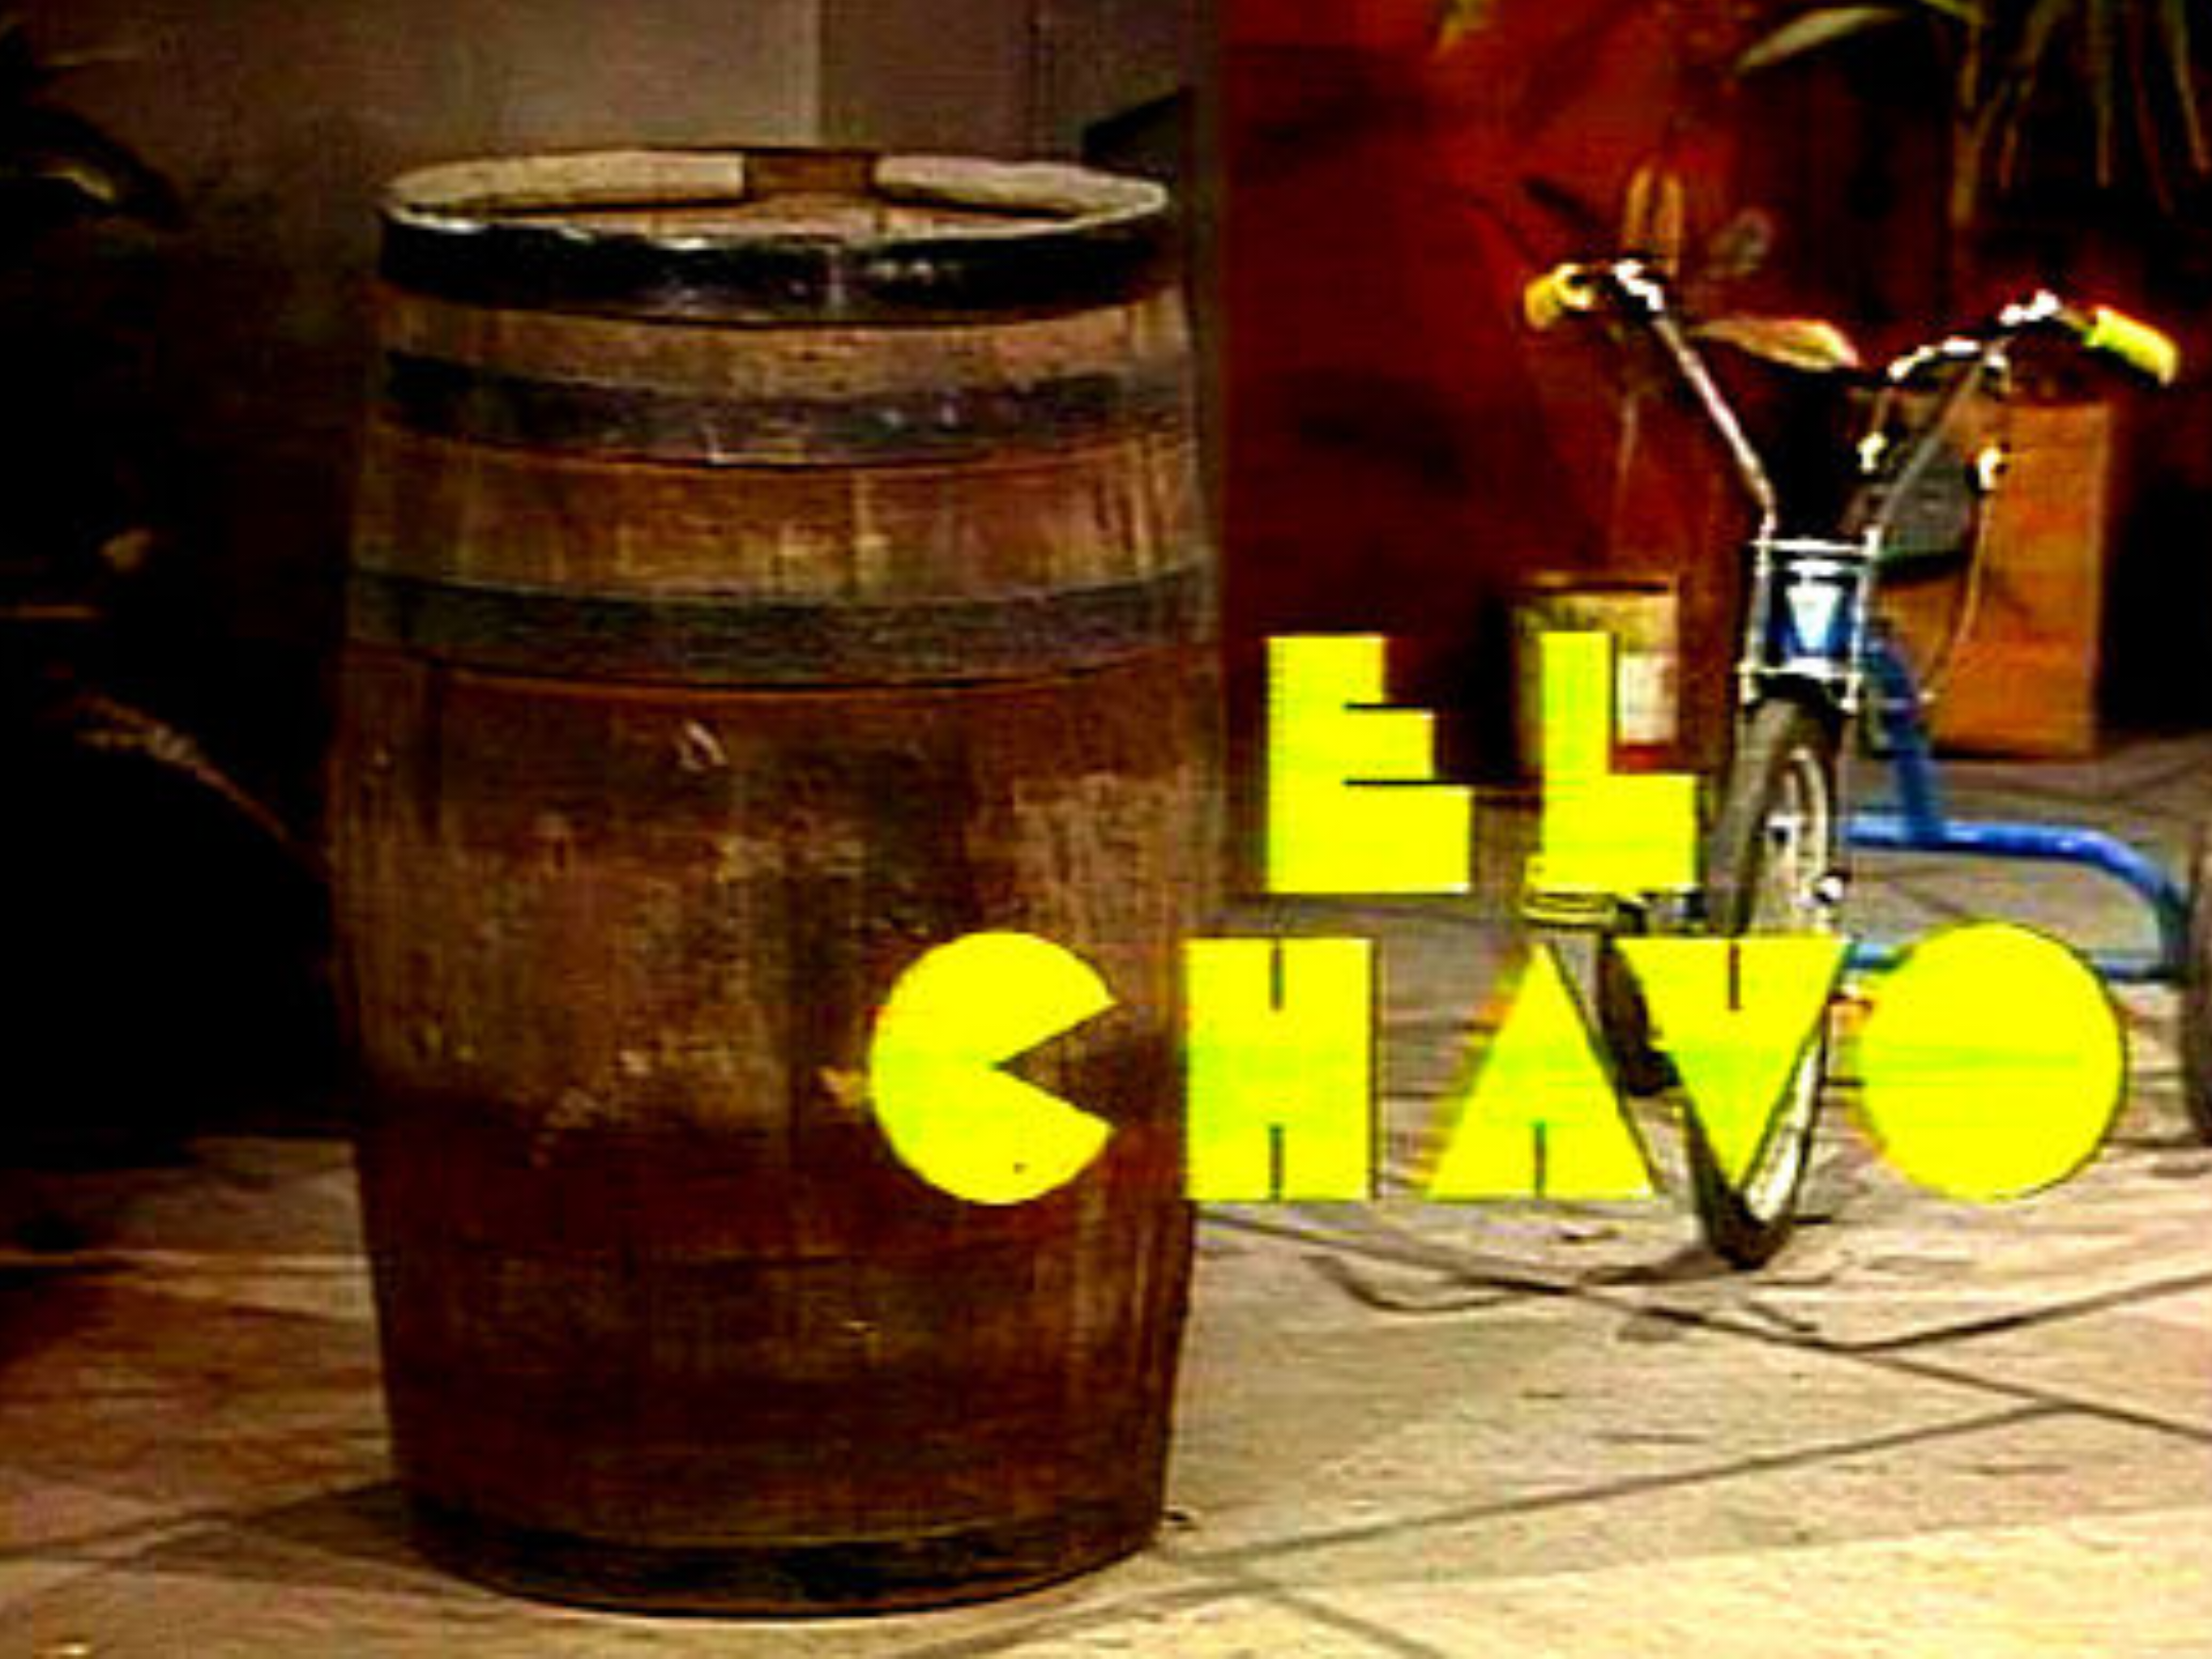 Chaves (El Chavo) by Dota - Banco de Séries